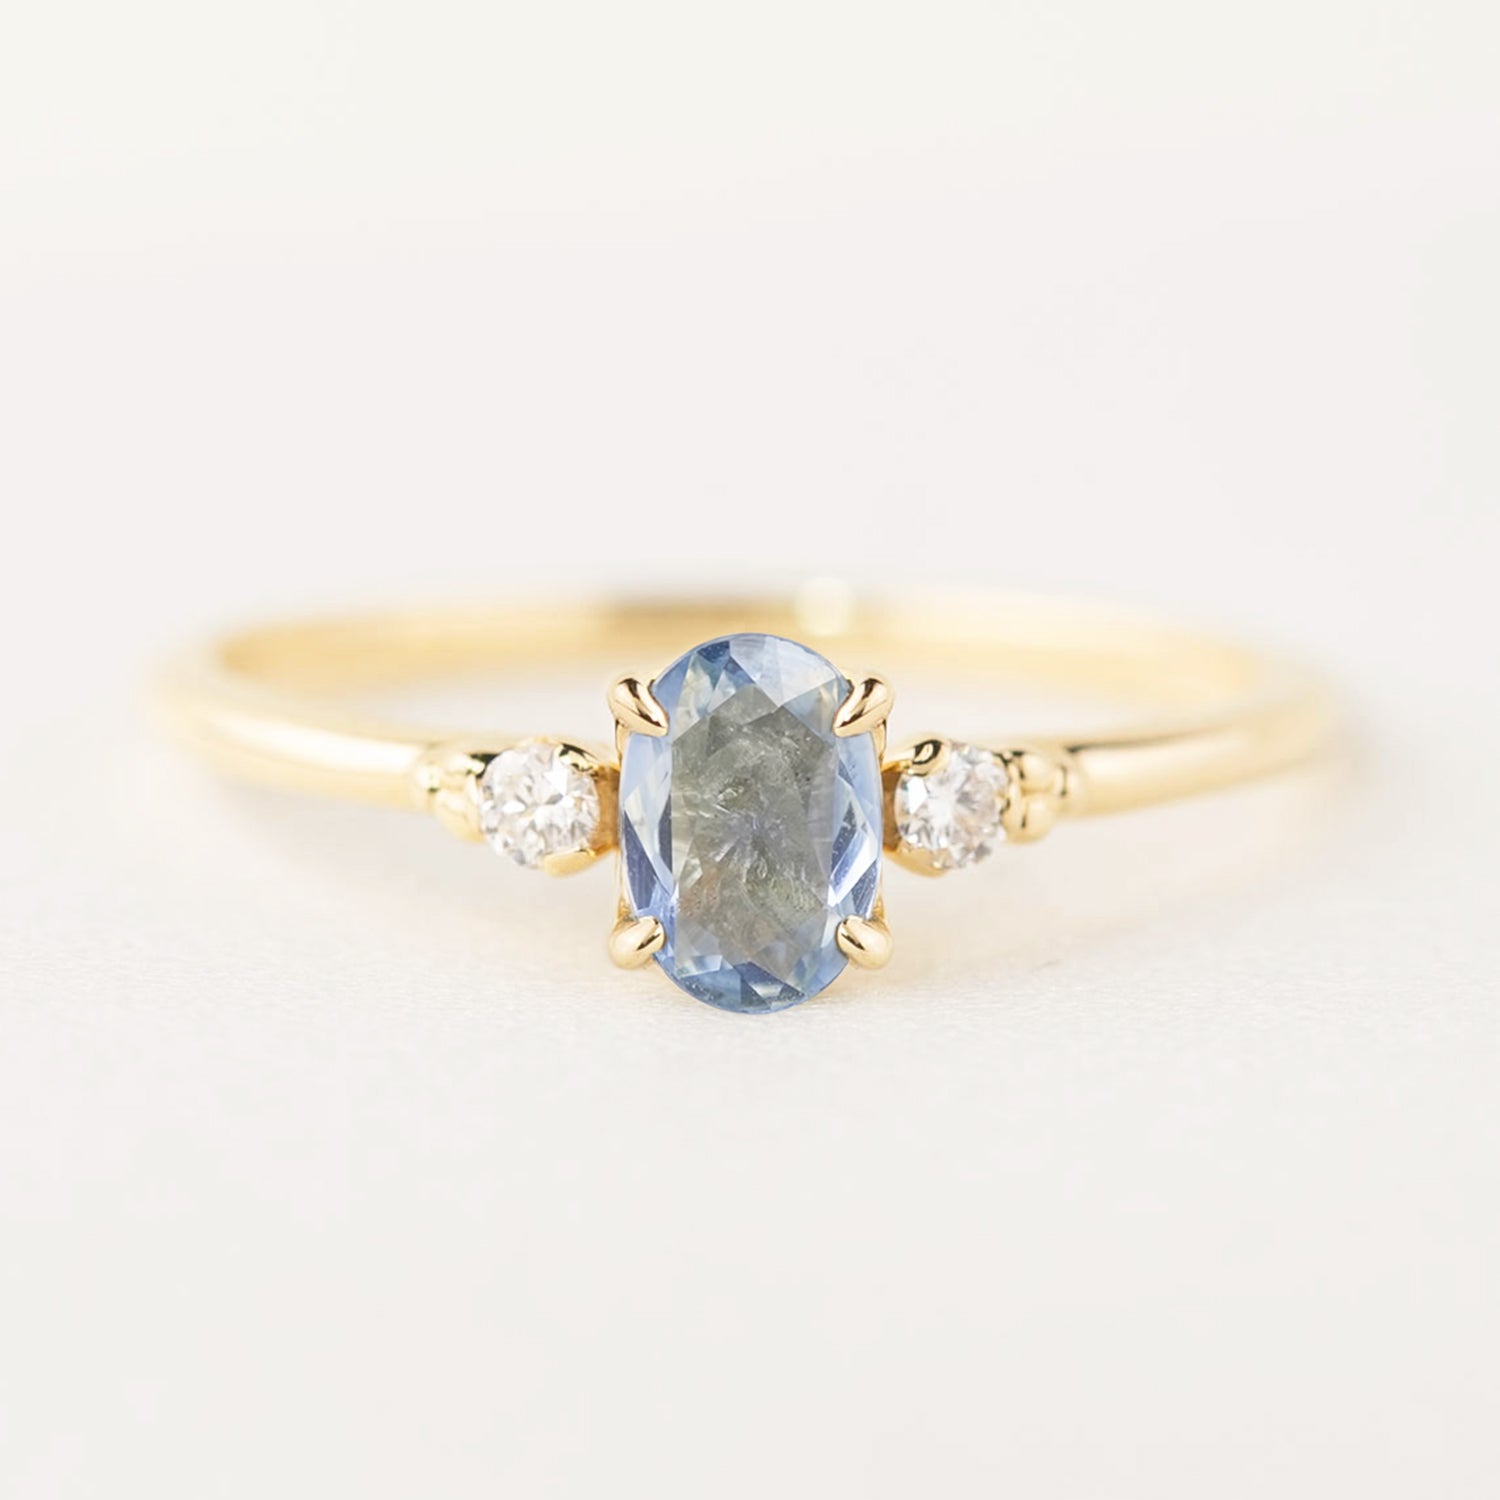 Hexagonal Blue Sapphire Ring - Element 79 Contemporary Jewelry